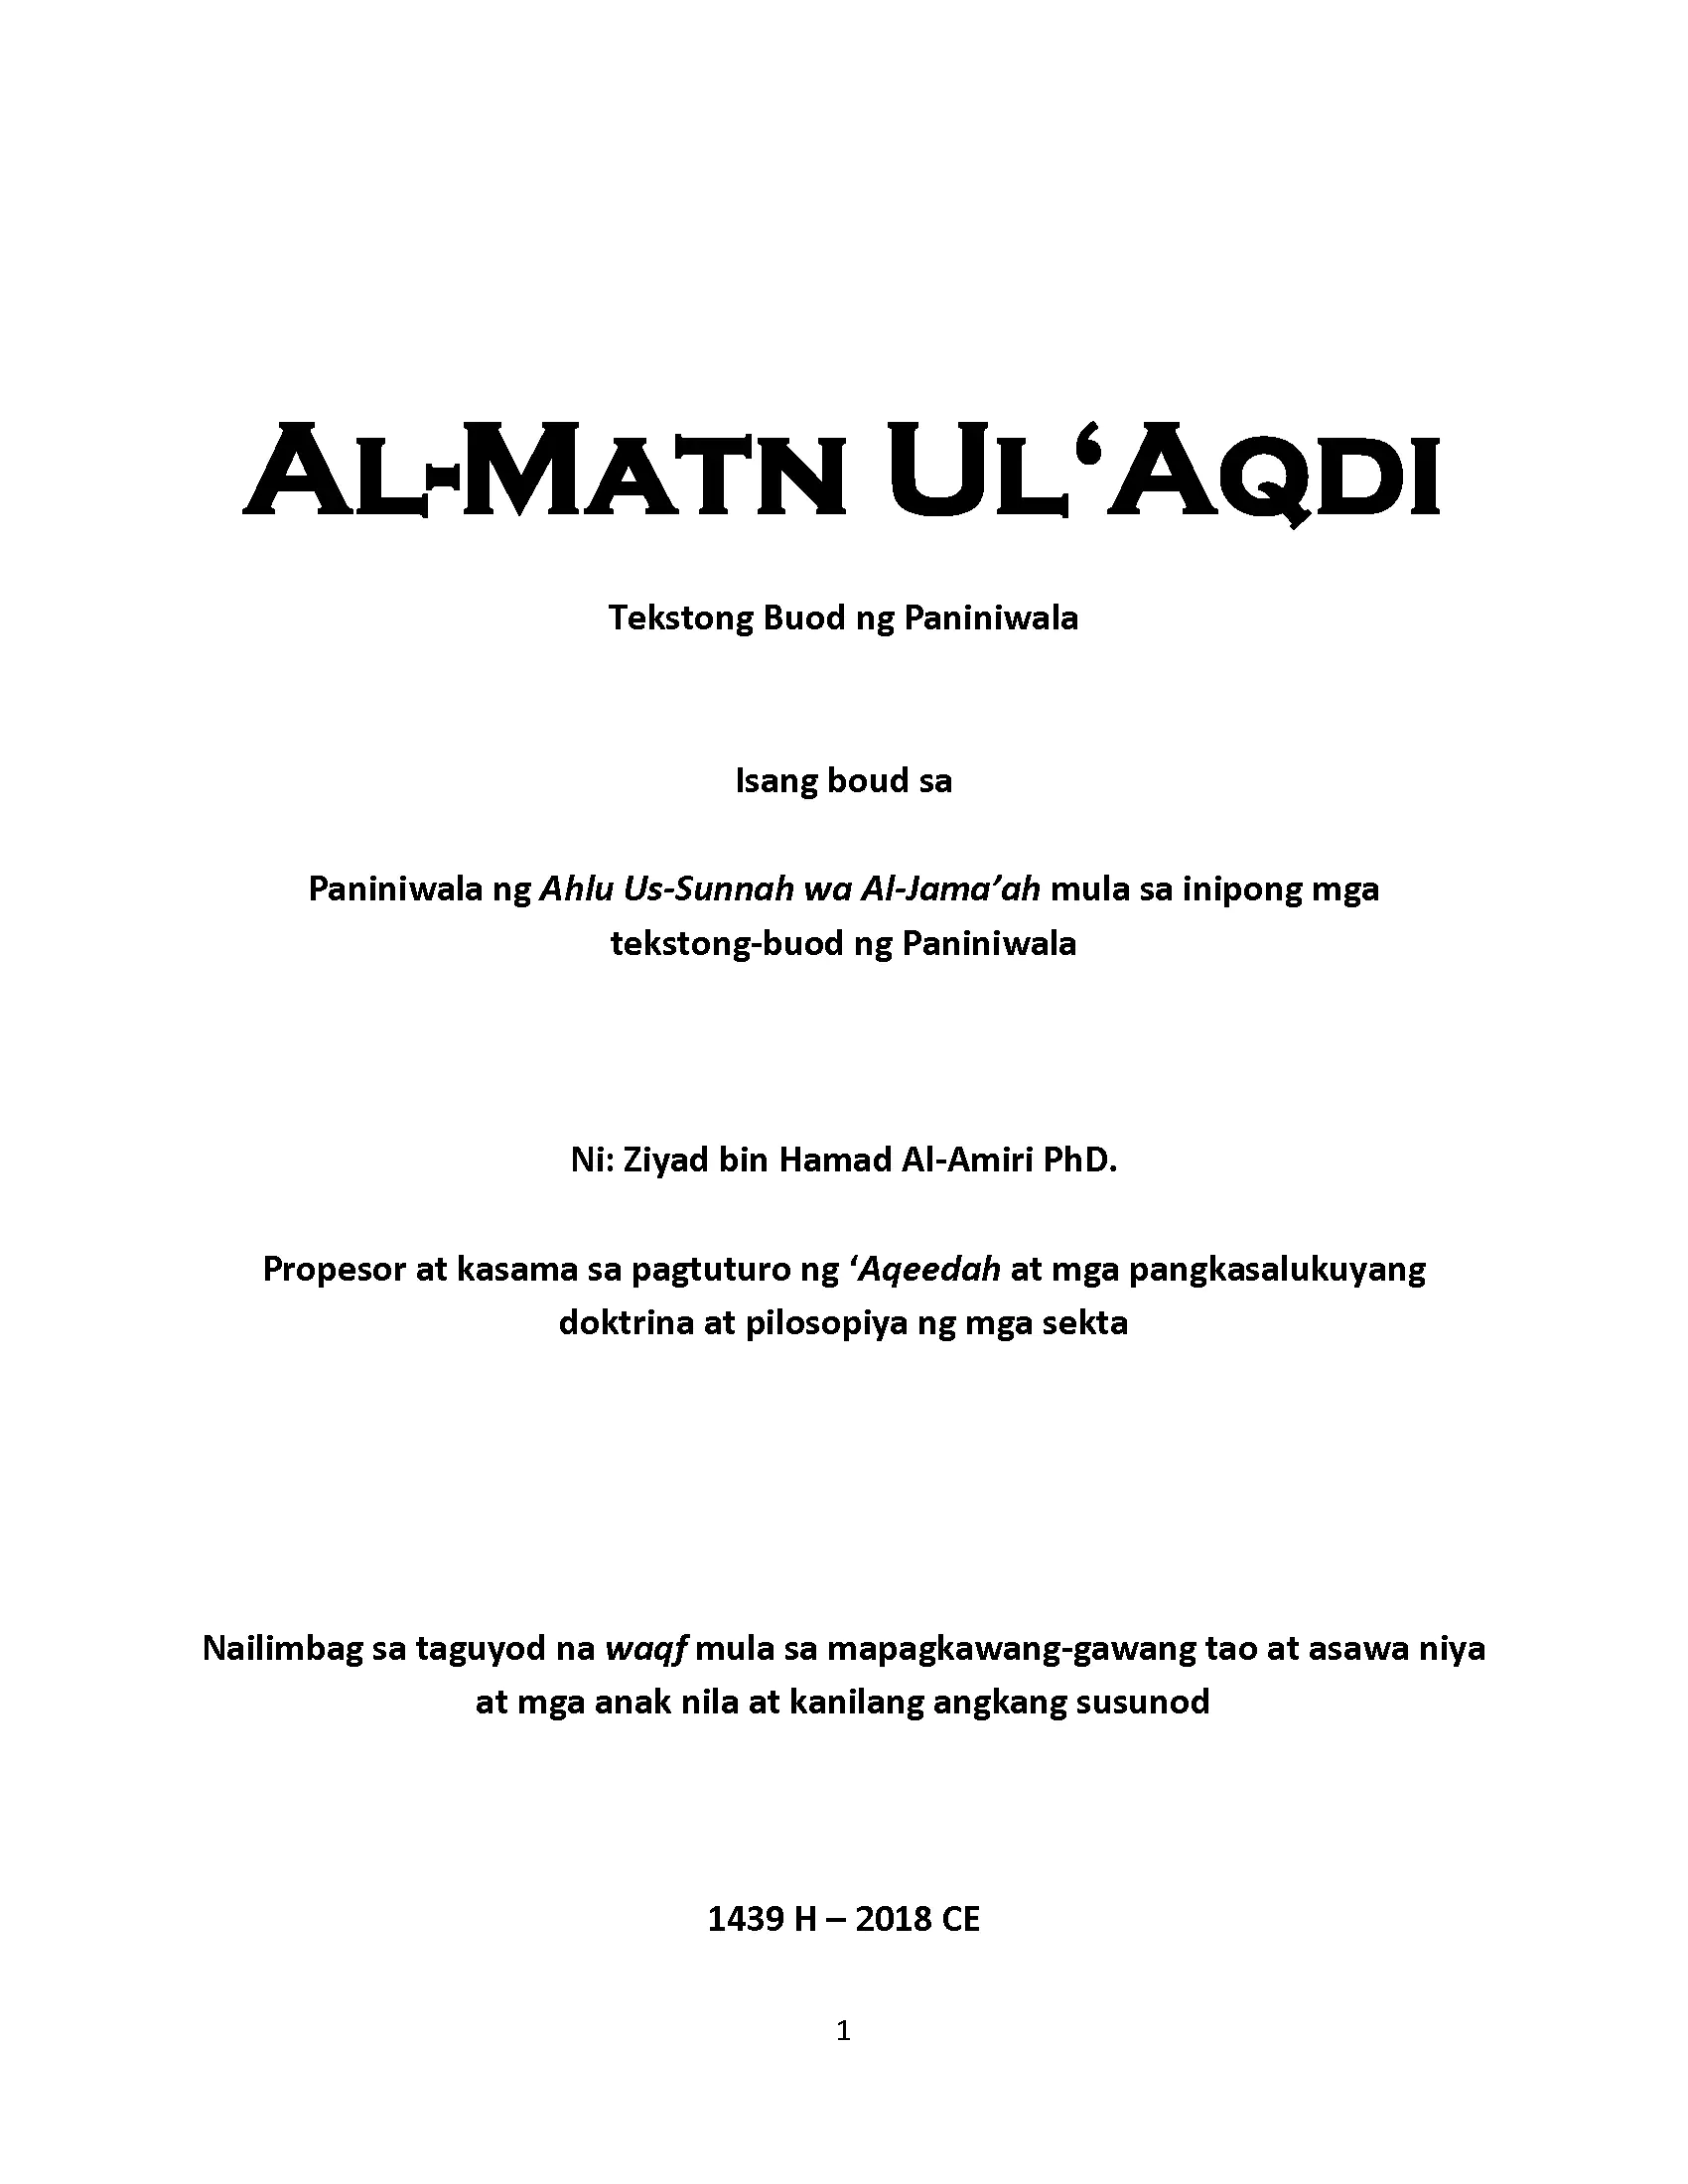 Al-Matn Ul‘Aqdi